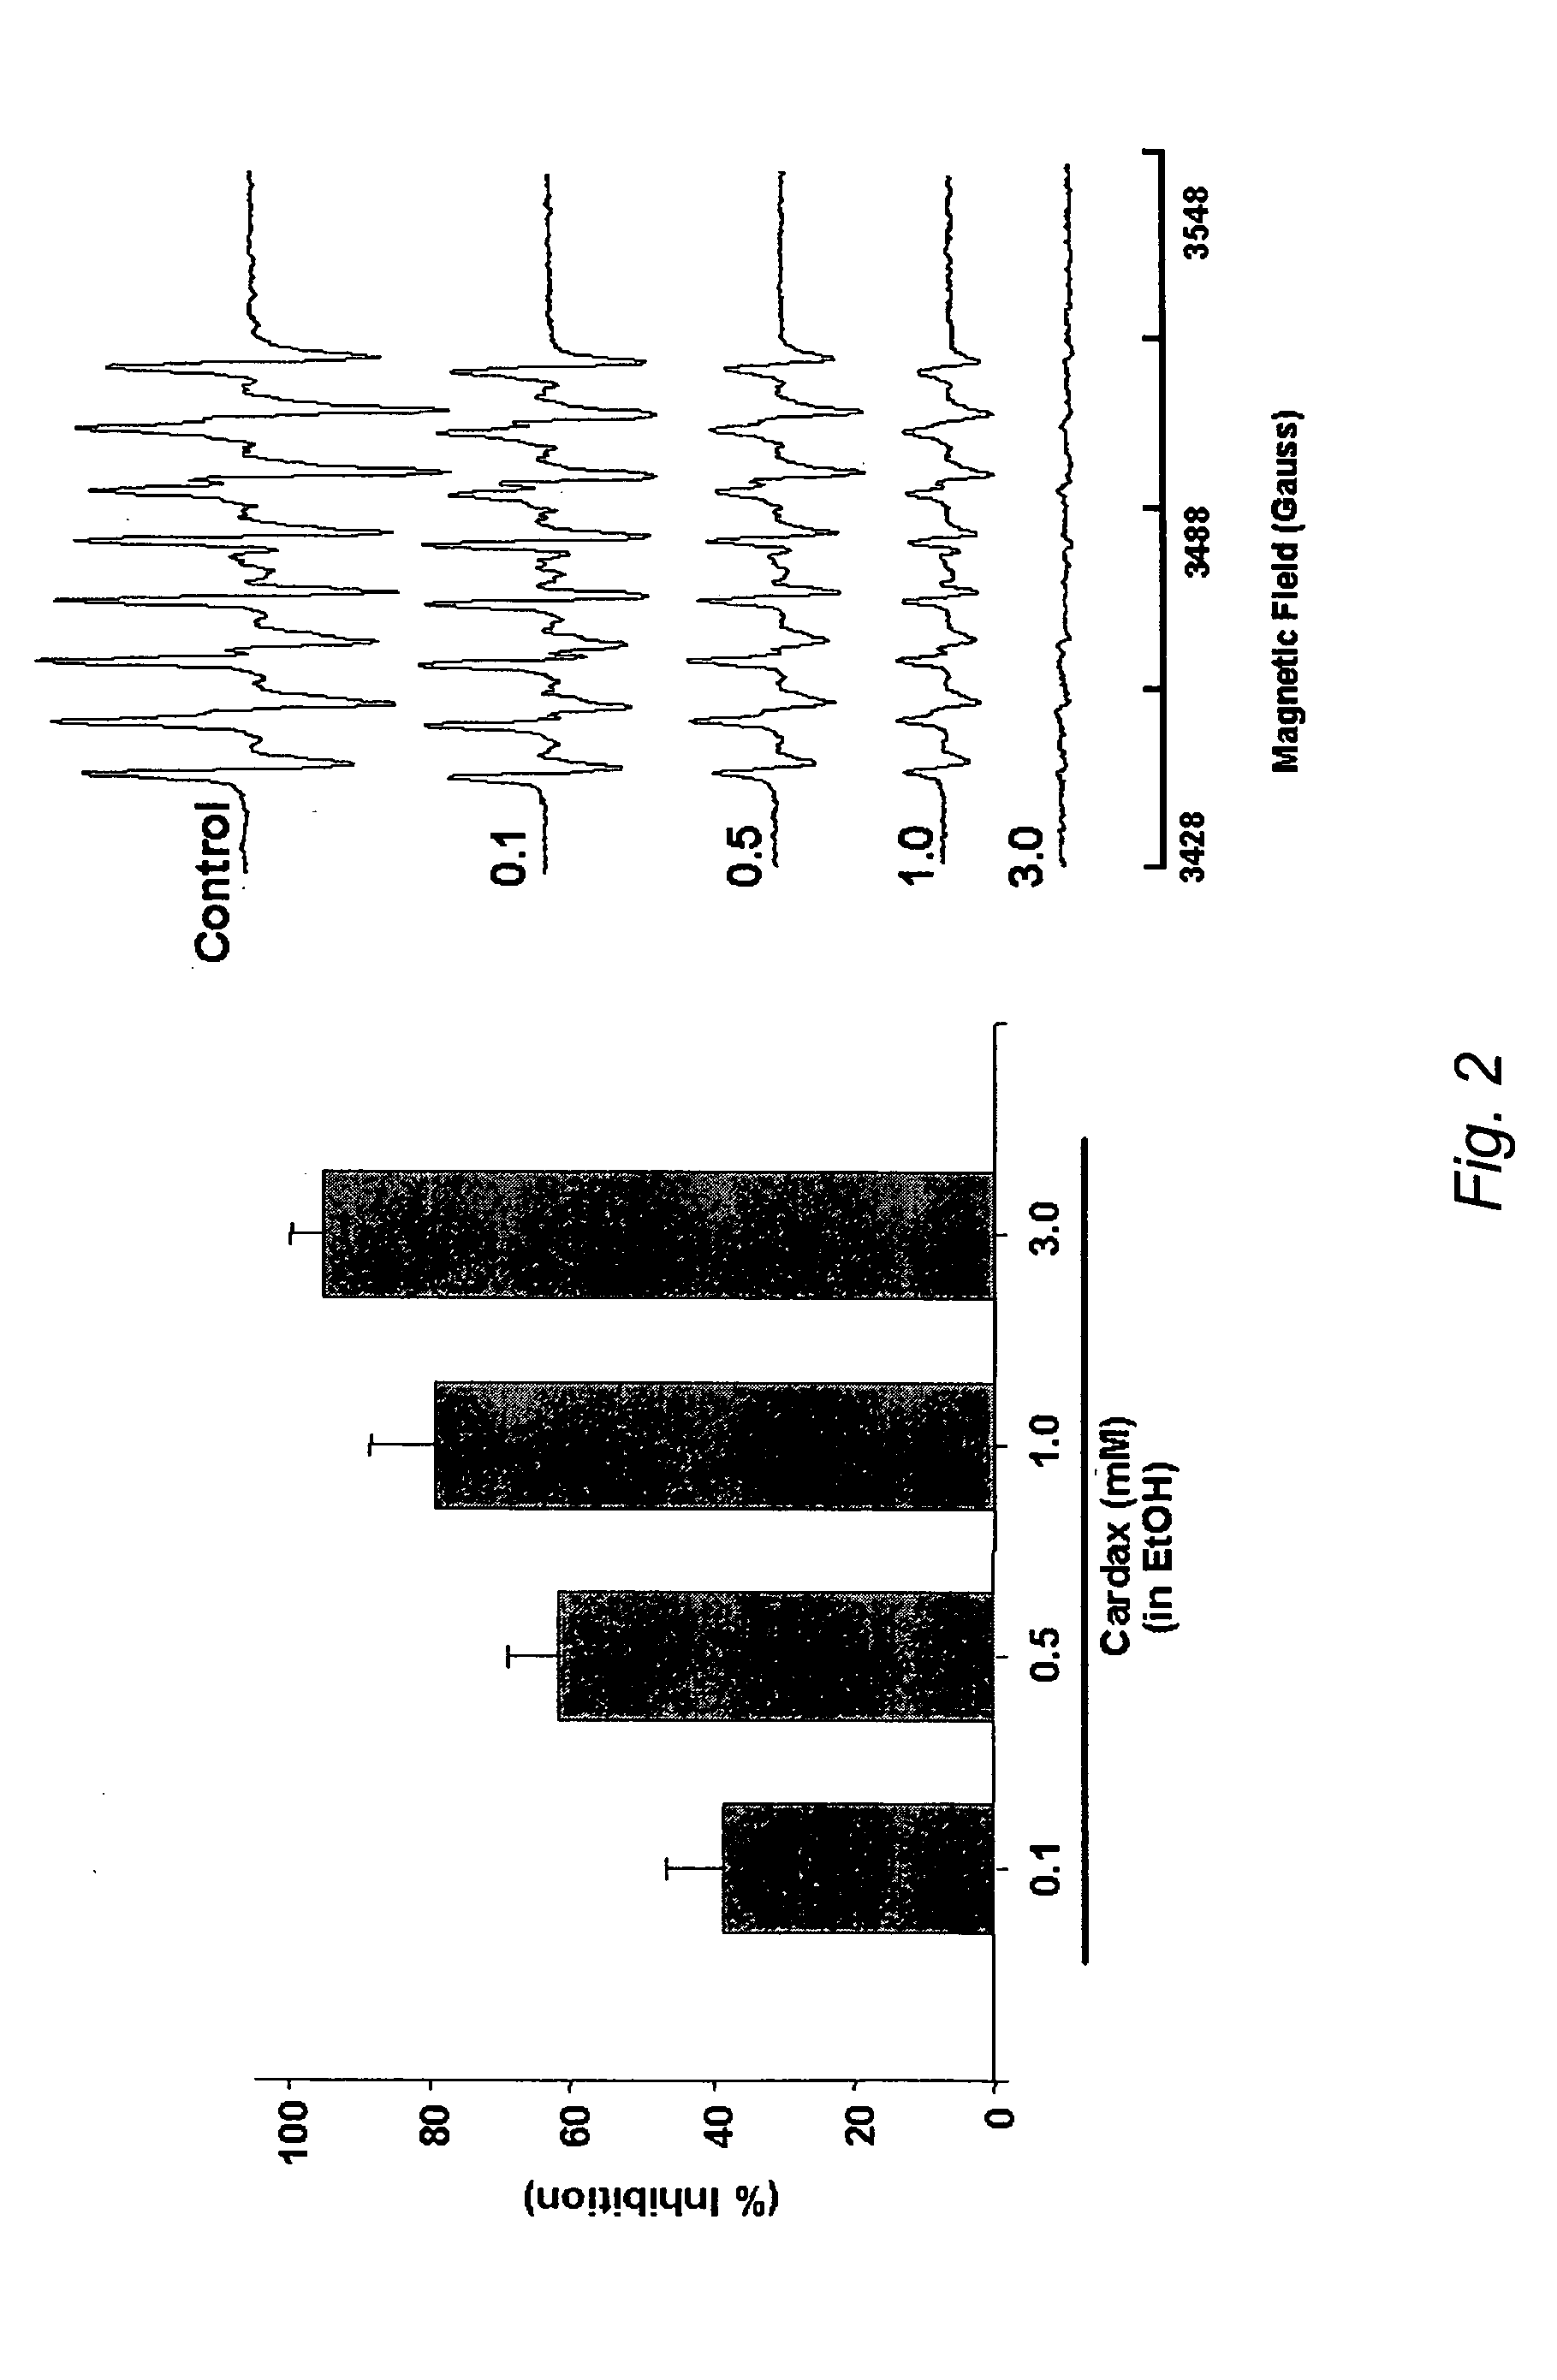 Carotenoid ester analogs or derivatives for controlling connexin 43 expression